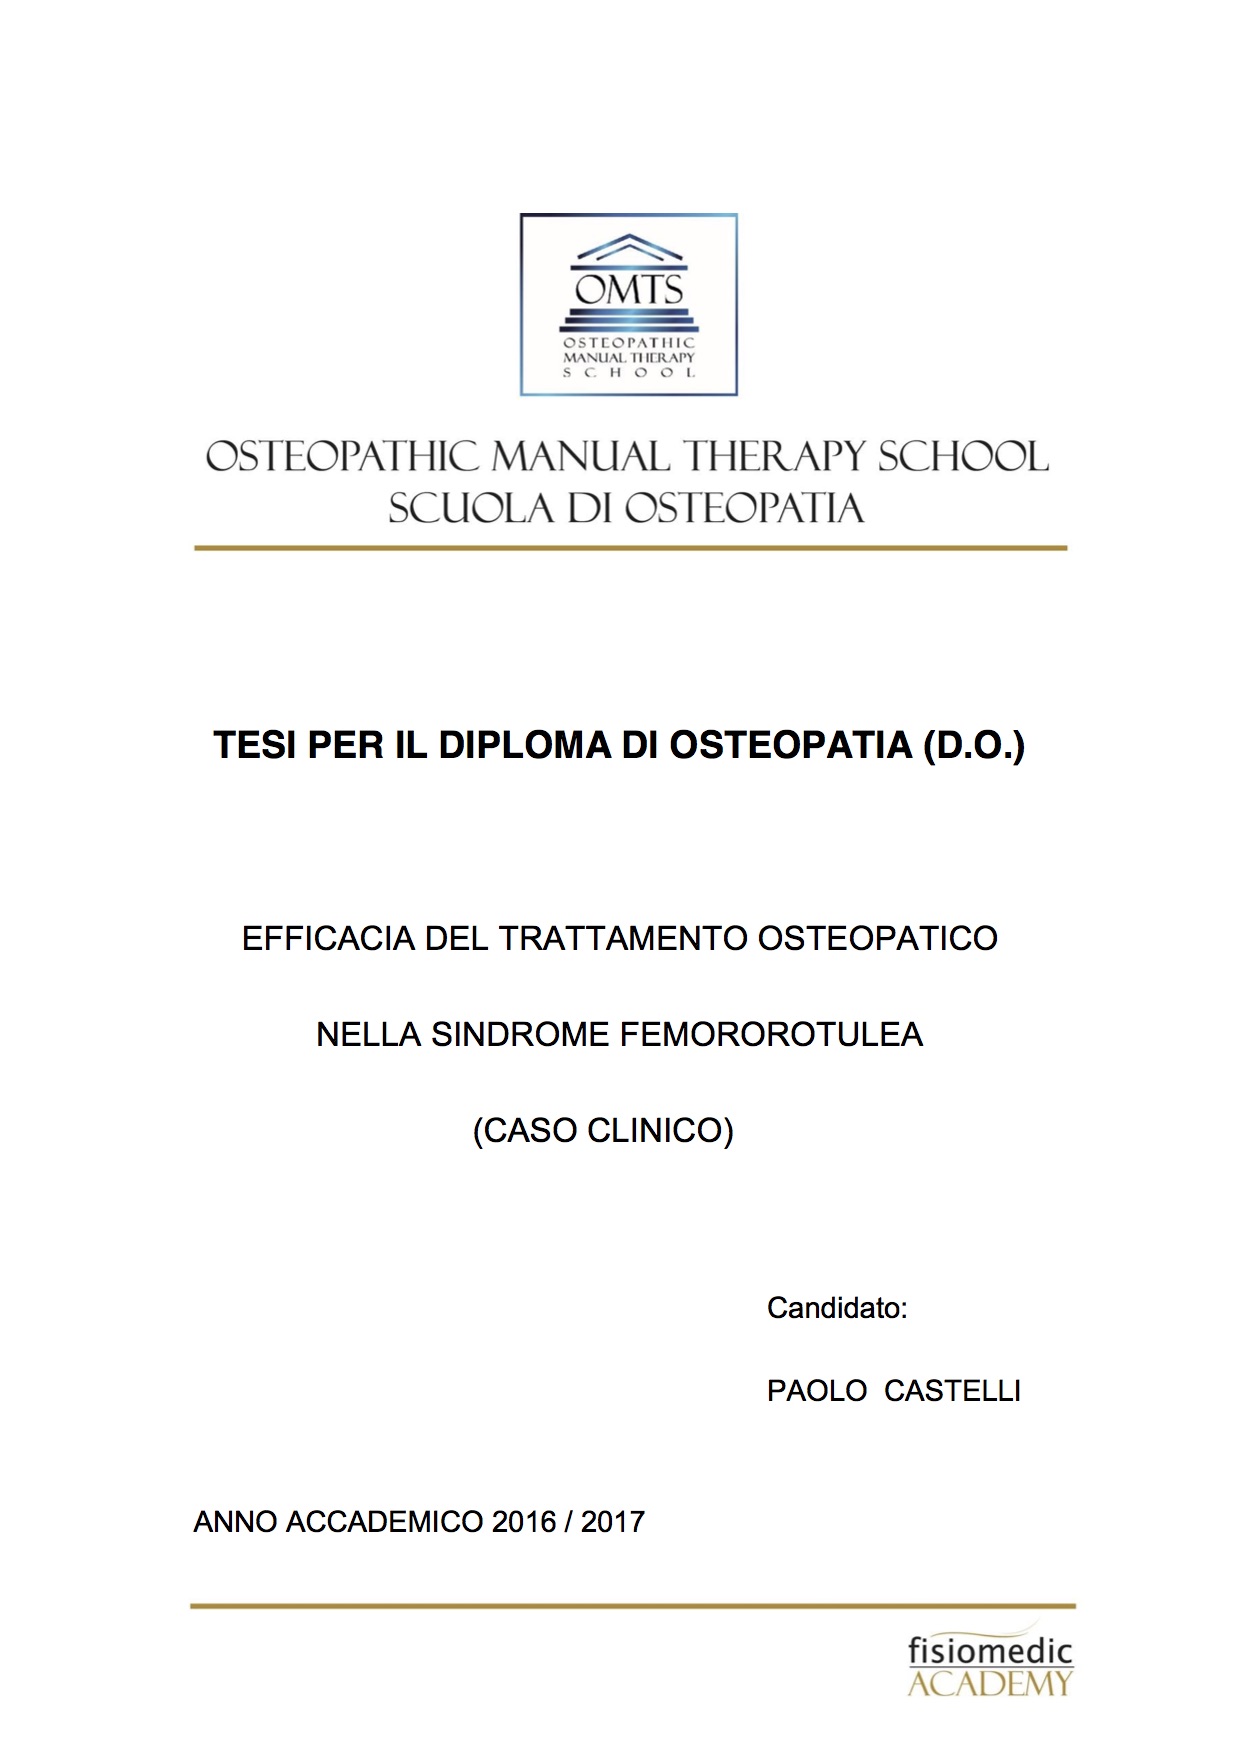 Paolo Castelli Tesi Diploma Osteopatia 2017